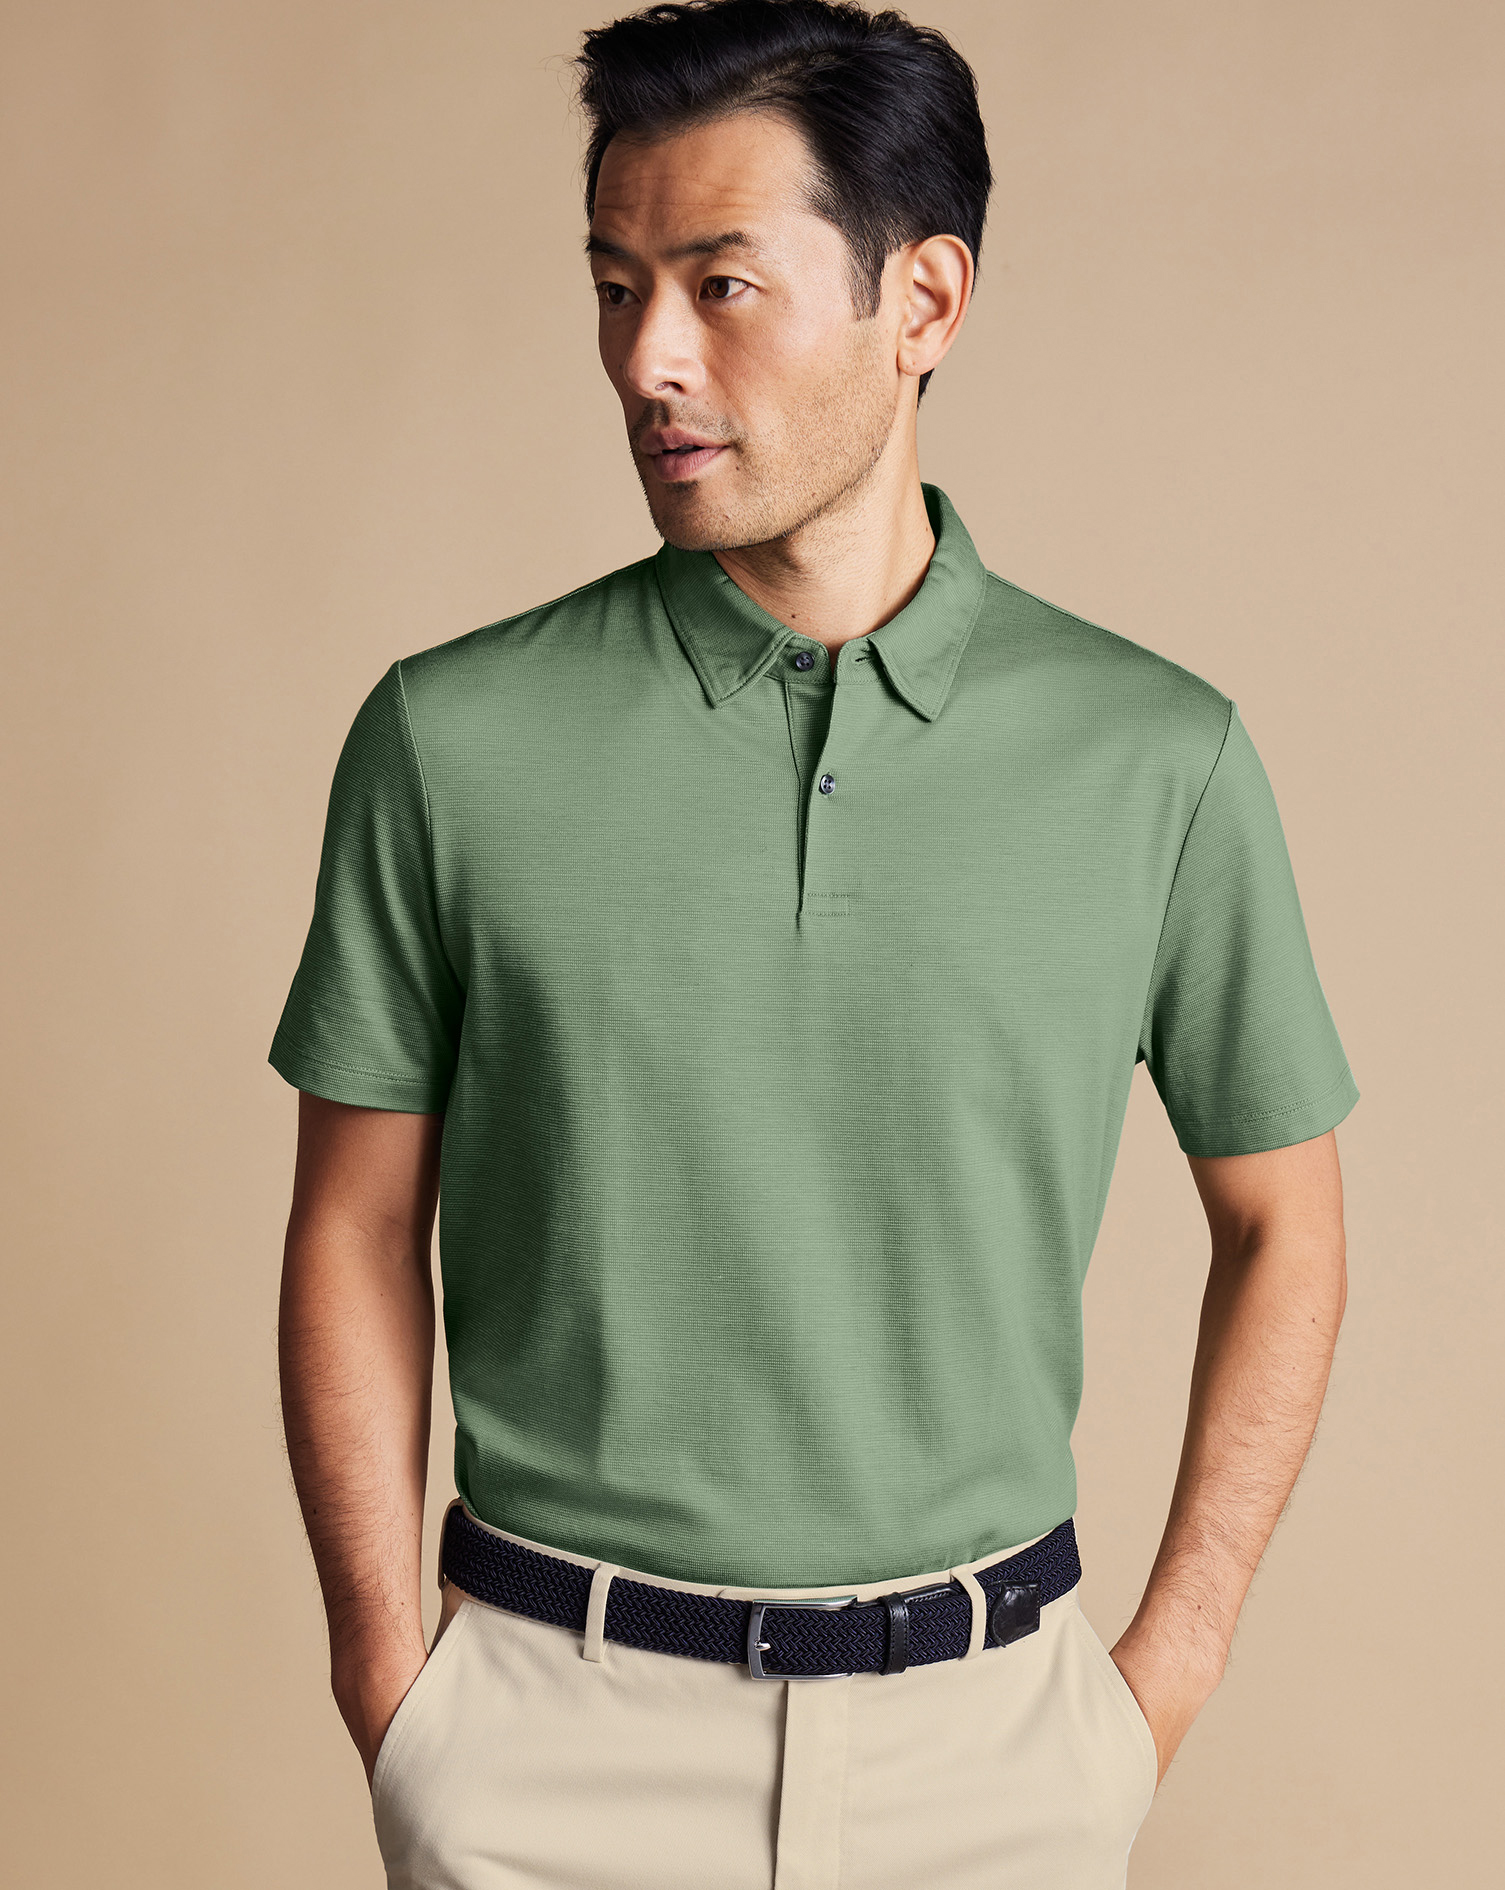 Men's Charles Tyrwhitt Cool Textured Polo Shirt - Light Green Size Large Cotton
